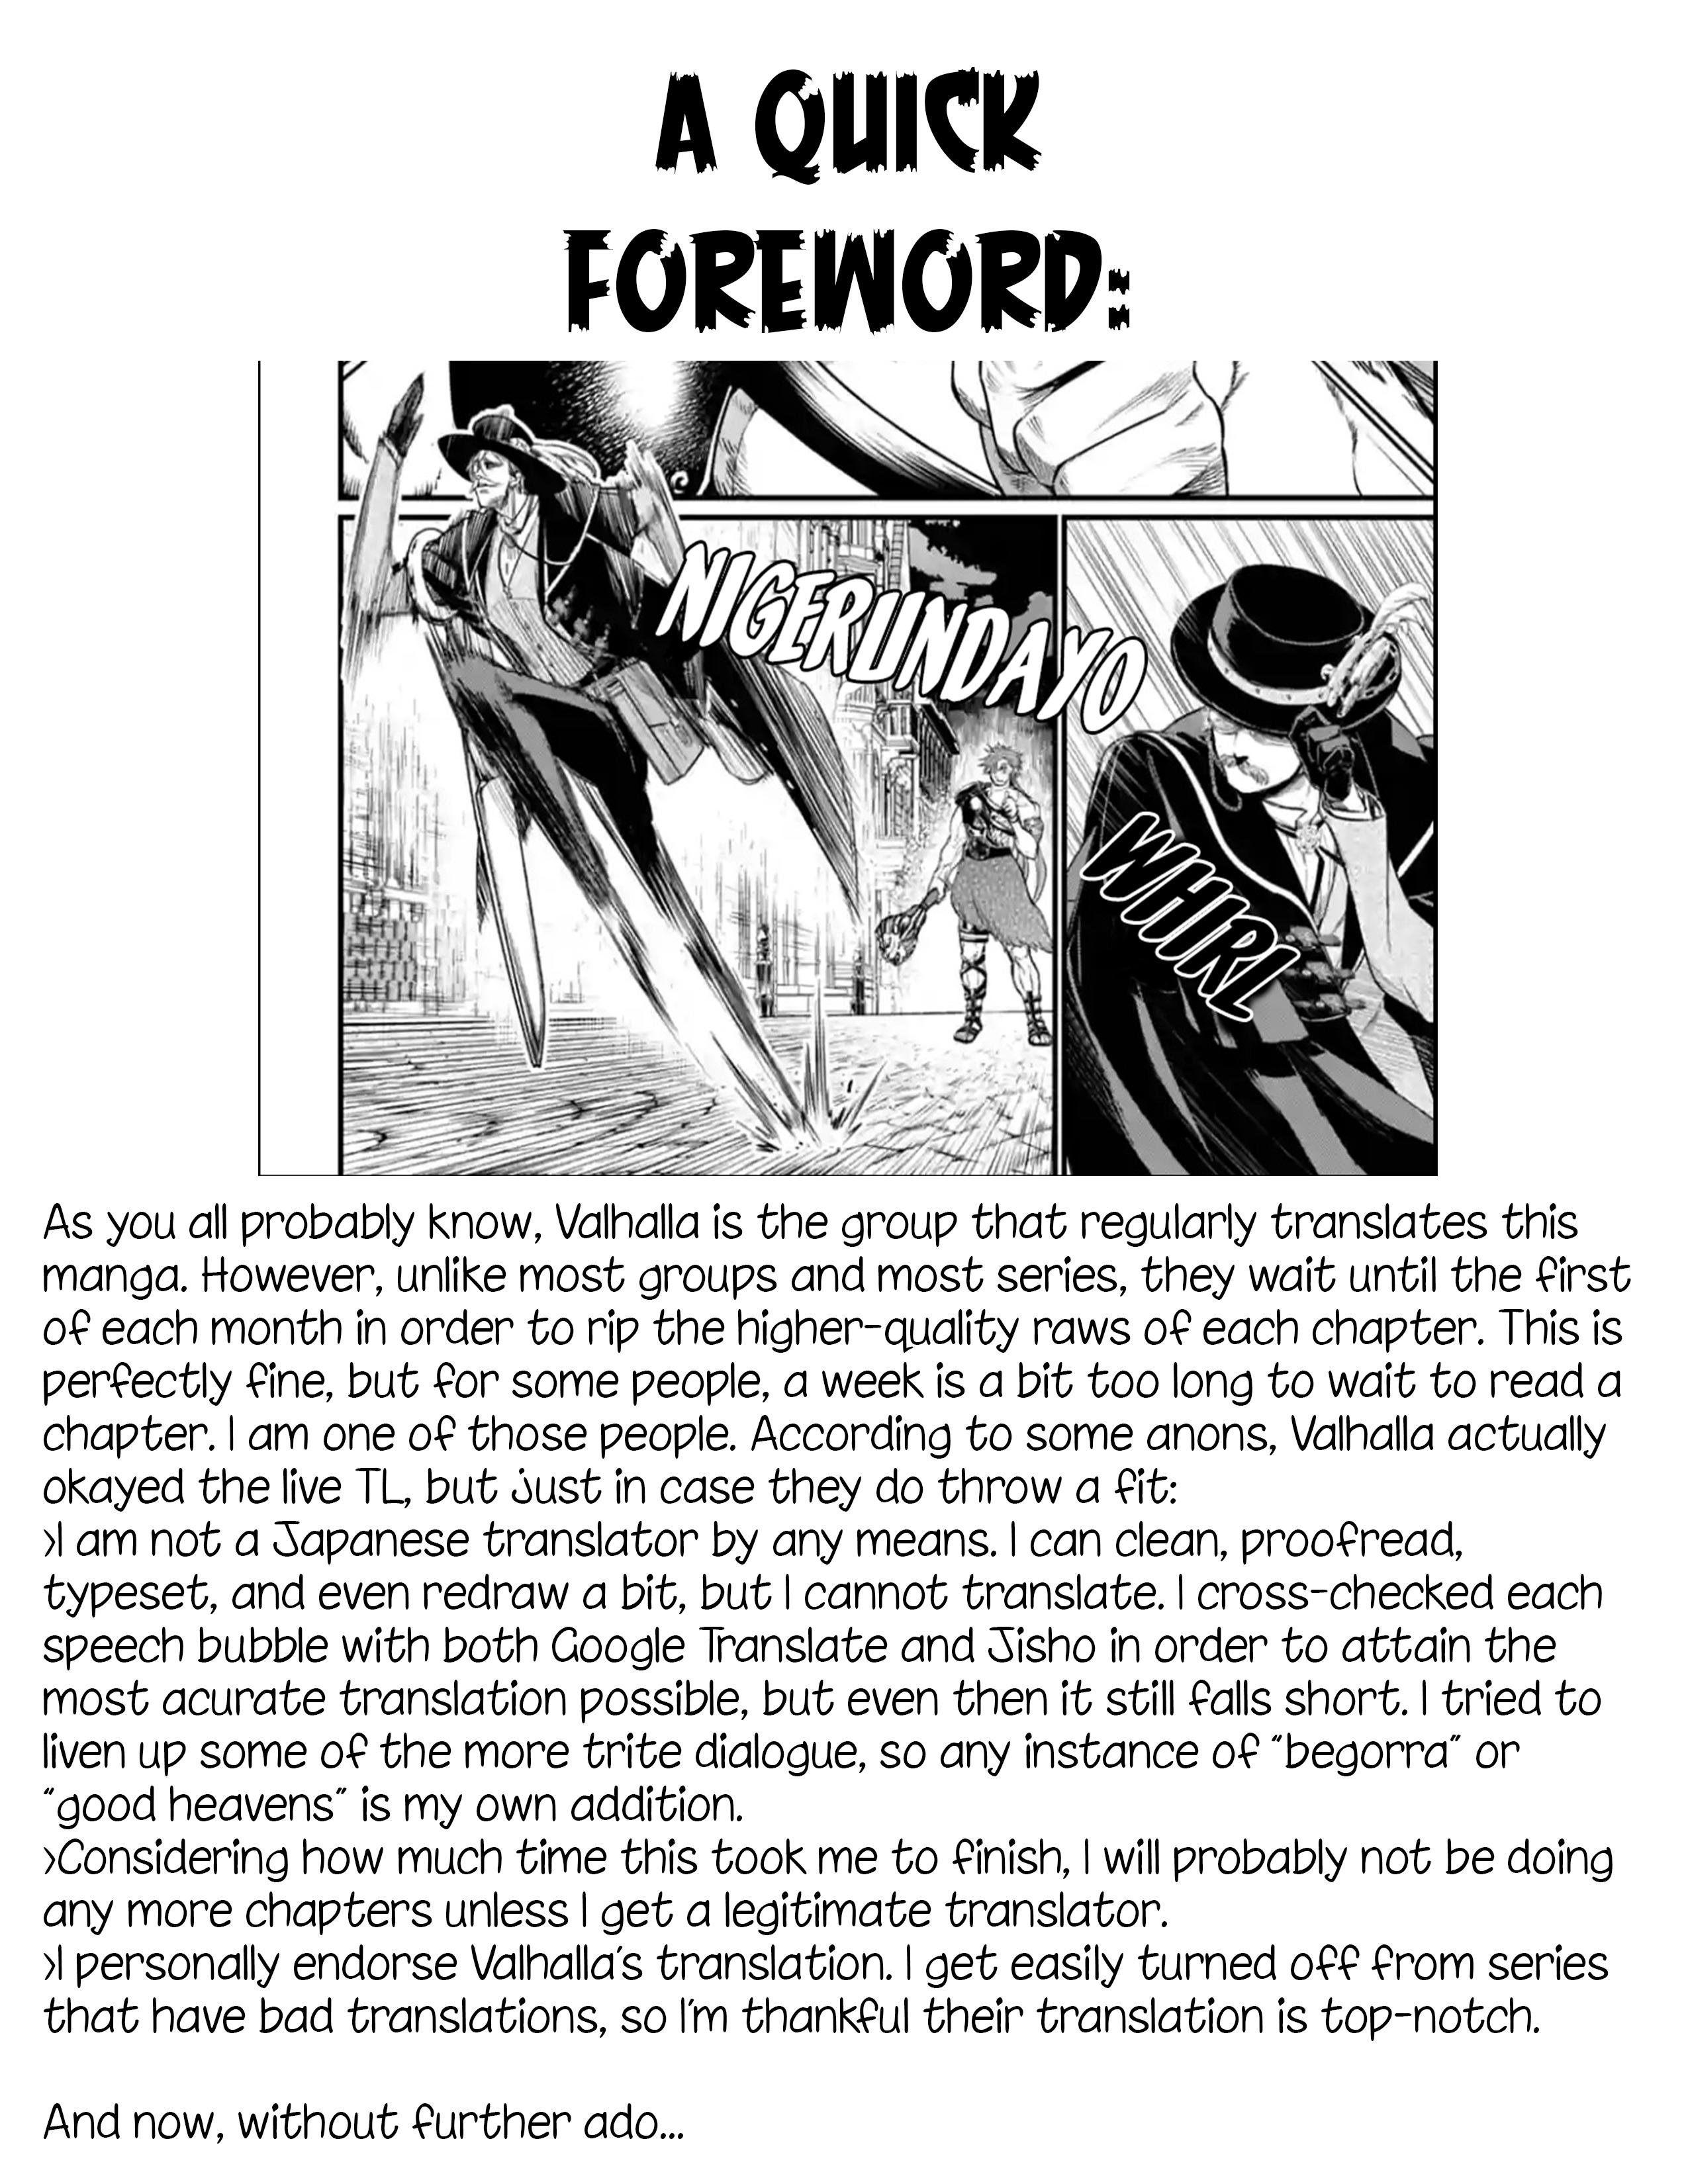 VIZ  Read Record of Ragnarok Manga